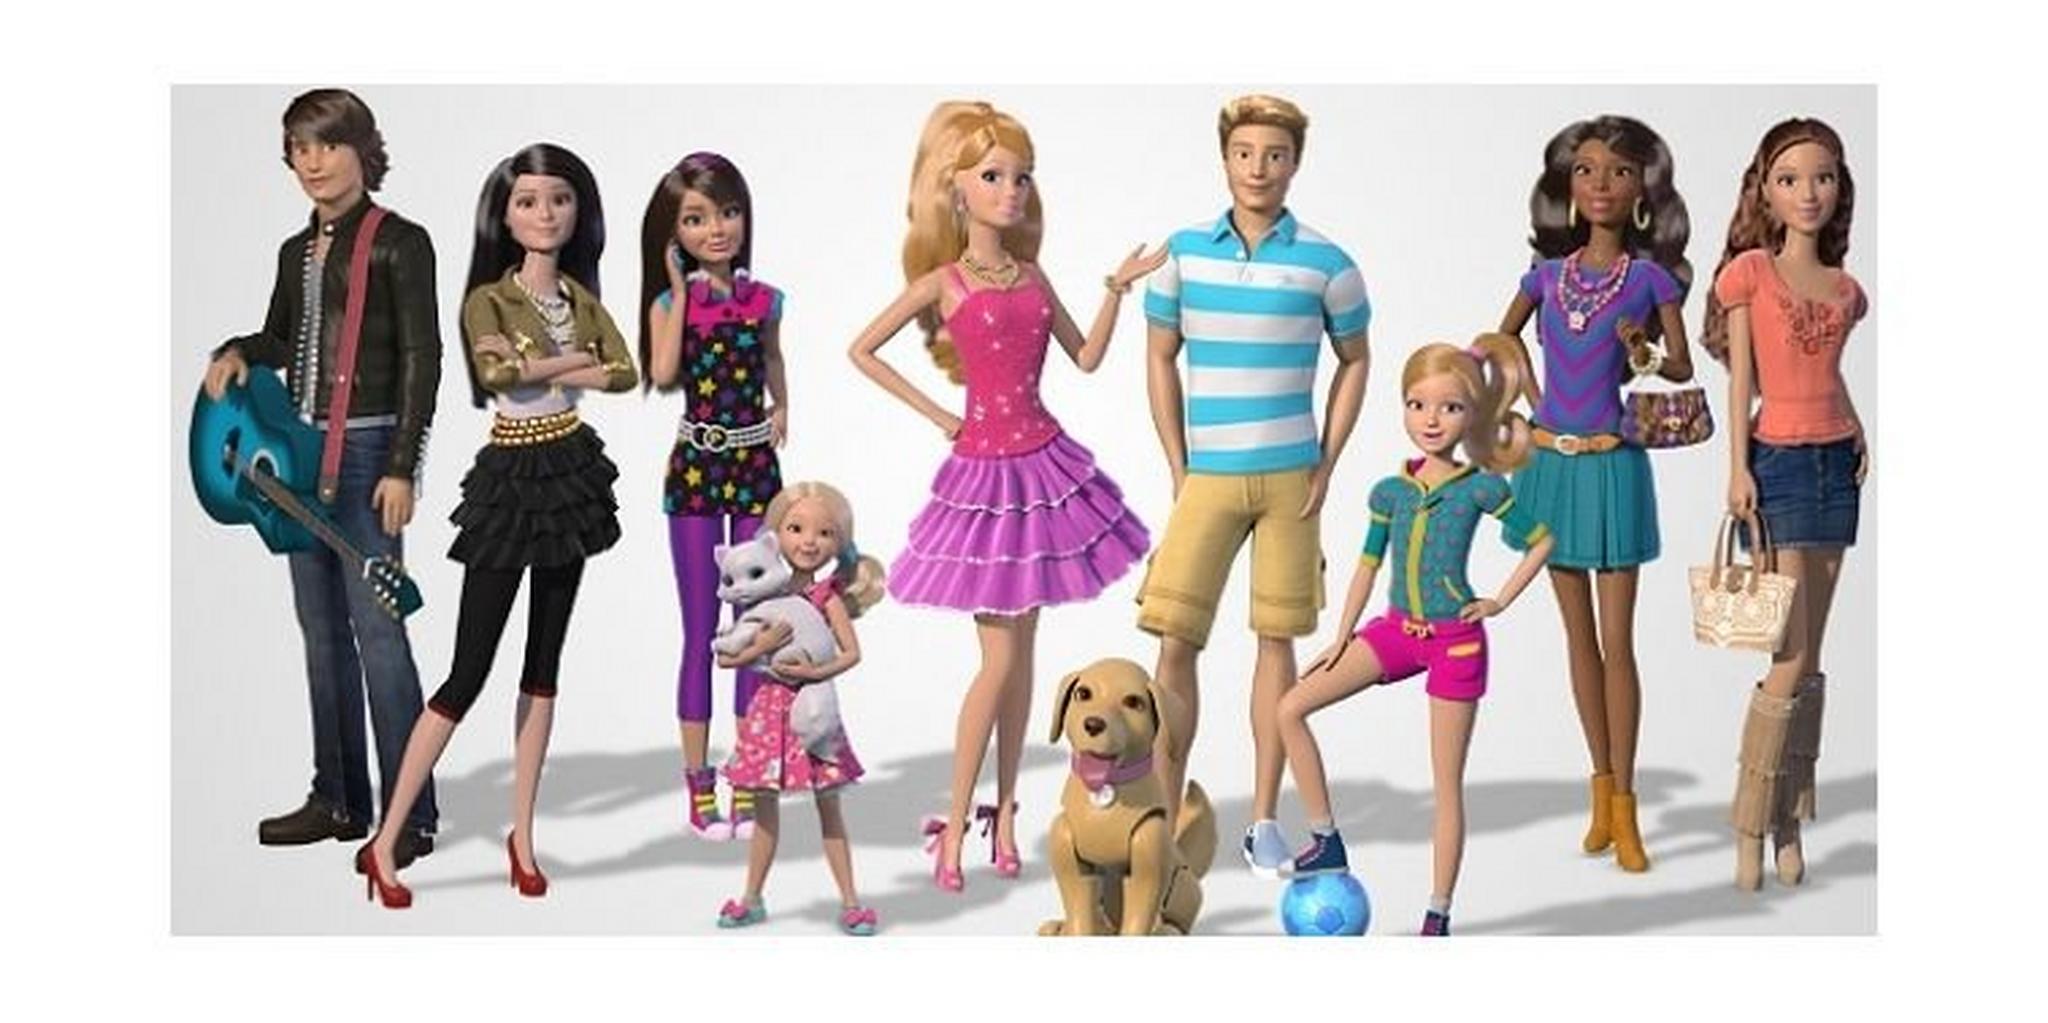 Barbie: Dreamhouse Party - Nintendo 3DS Game